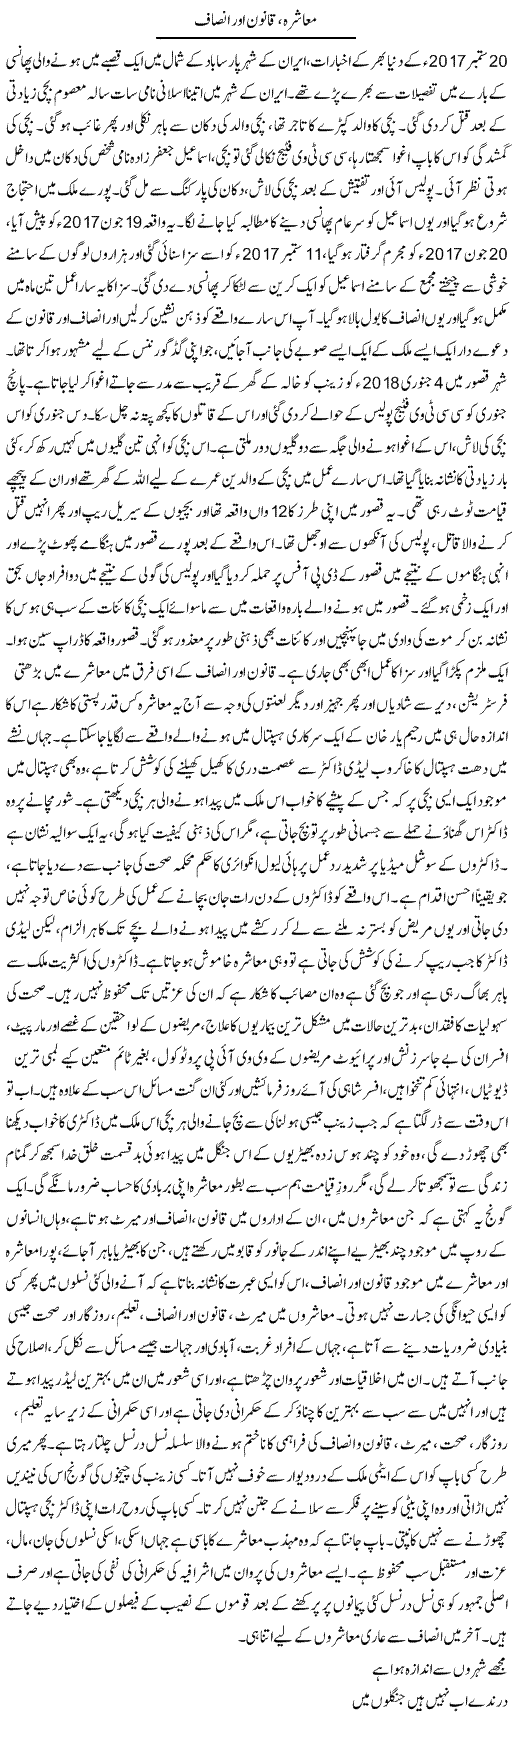 Muashra, Qanoon Aur Insaf | Dr. Afaan Qaiser | Daily Urdu Columns